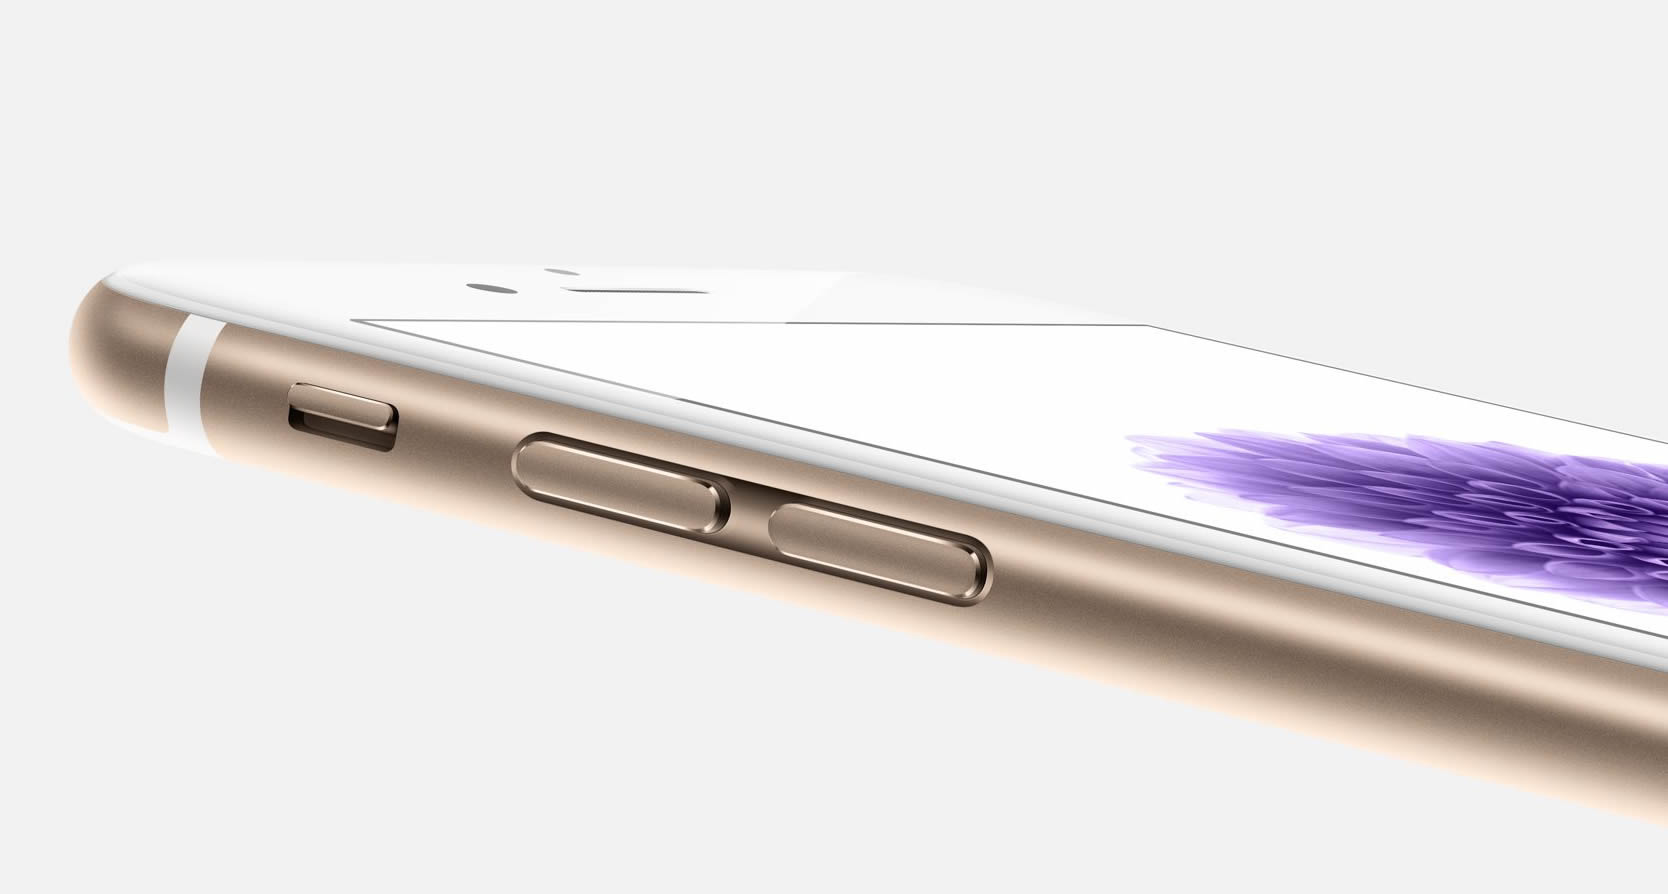 Apple iPhone 6 - Thin Design